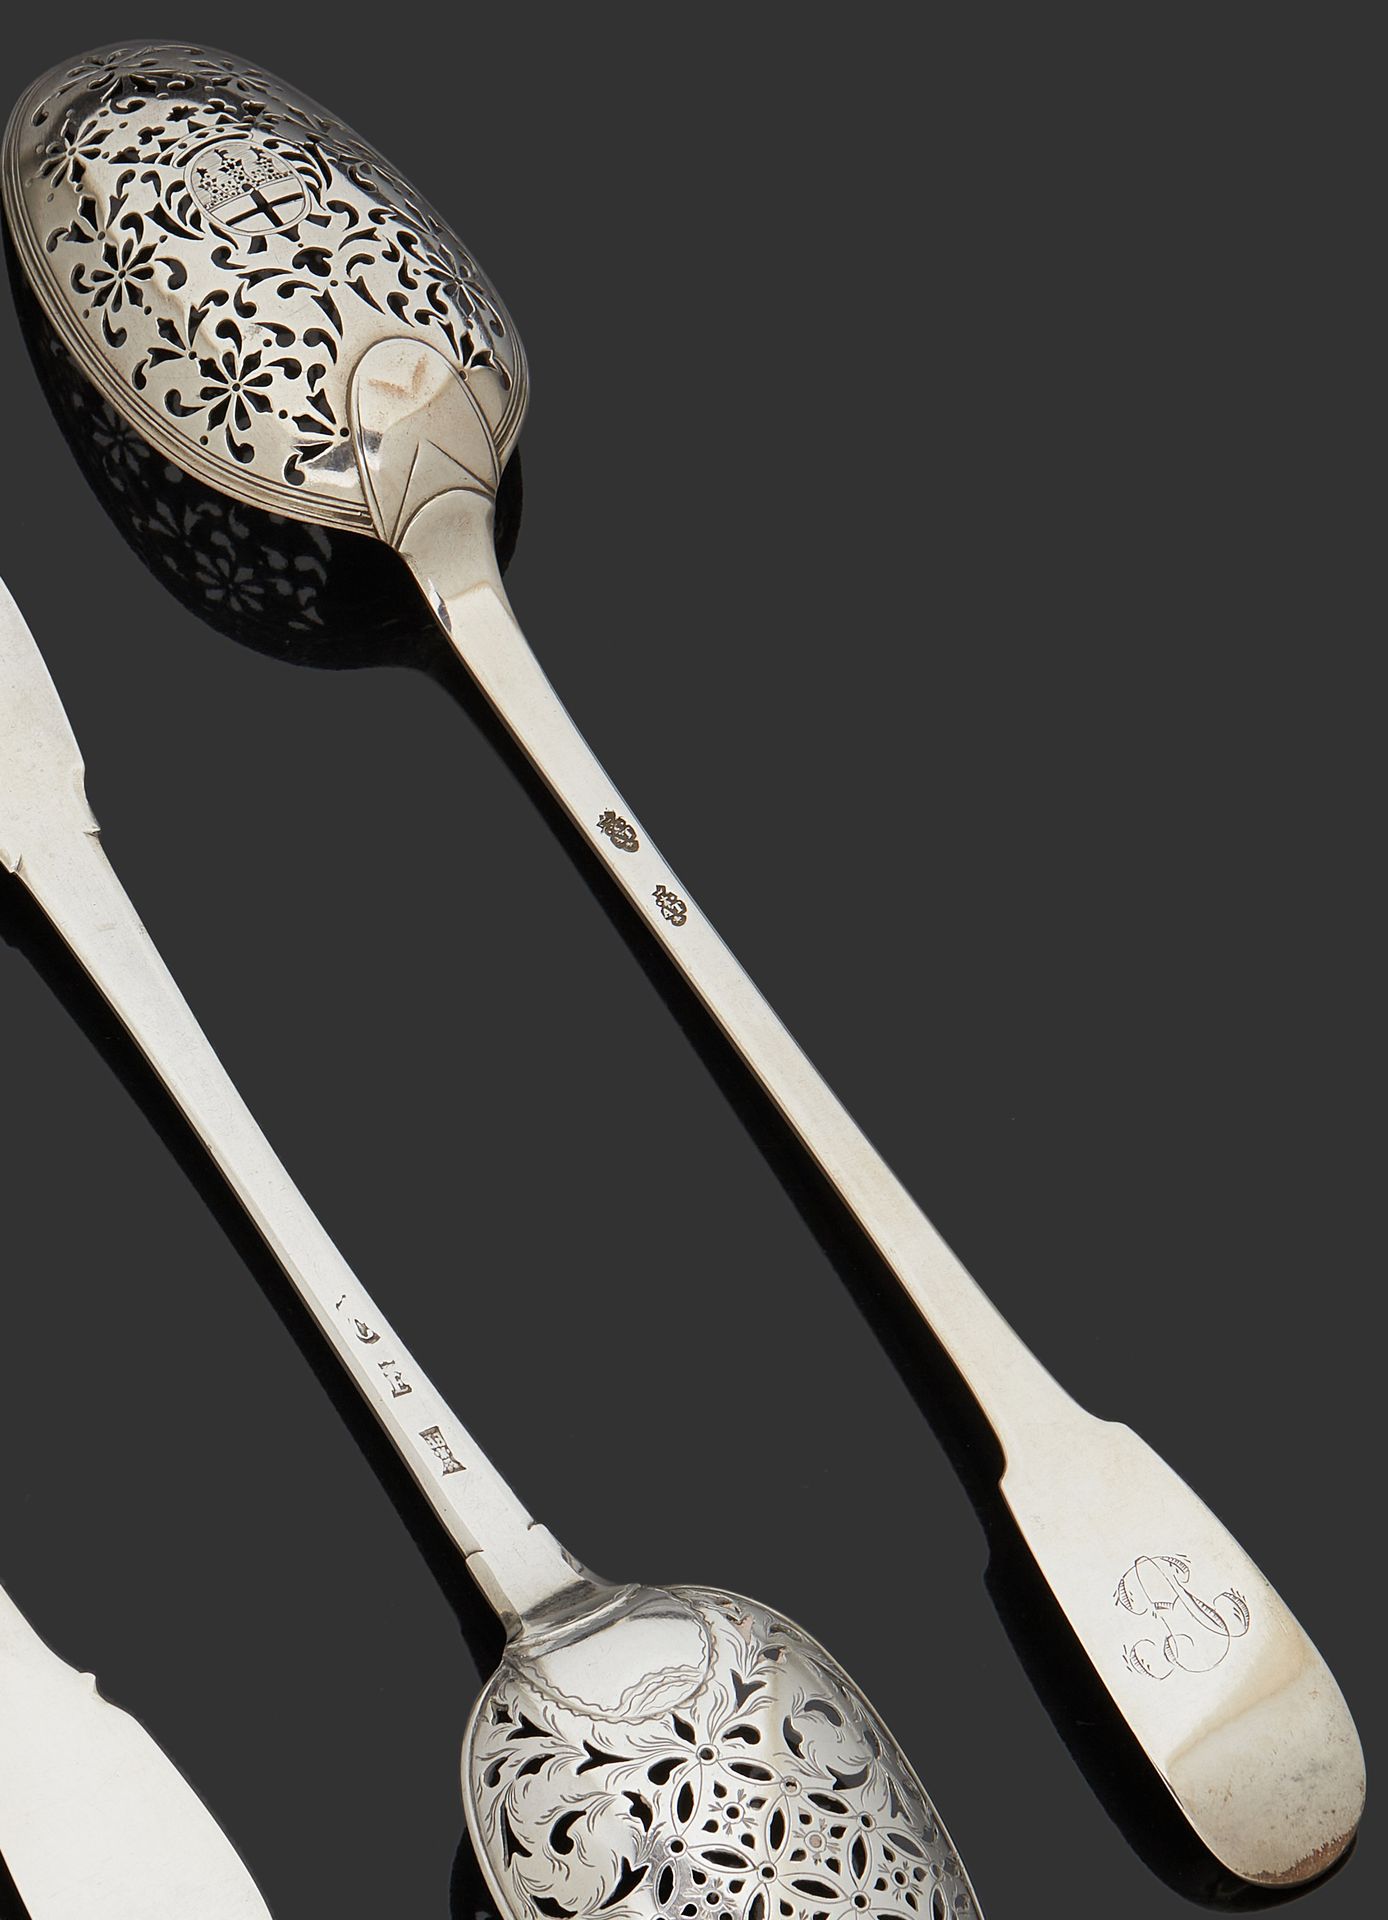 Null 法国 十八世纪
银质橄榄勺，单板模型，铲子上刻有后期交织的字母，勺头以细丝为边，勺子的中央部分显示了一个侯爵皇冠上的纹章，以郁金香和鲜花为框架。
银器&hellip;